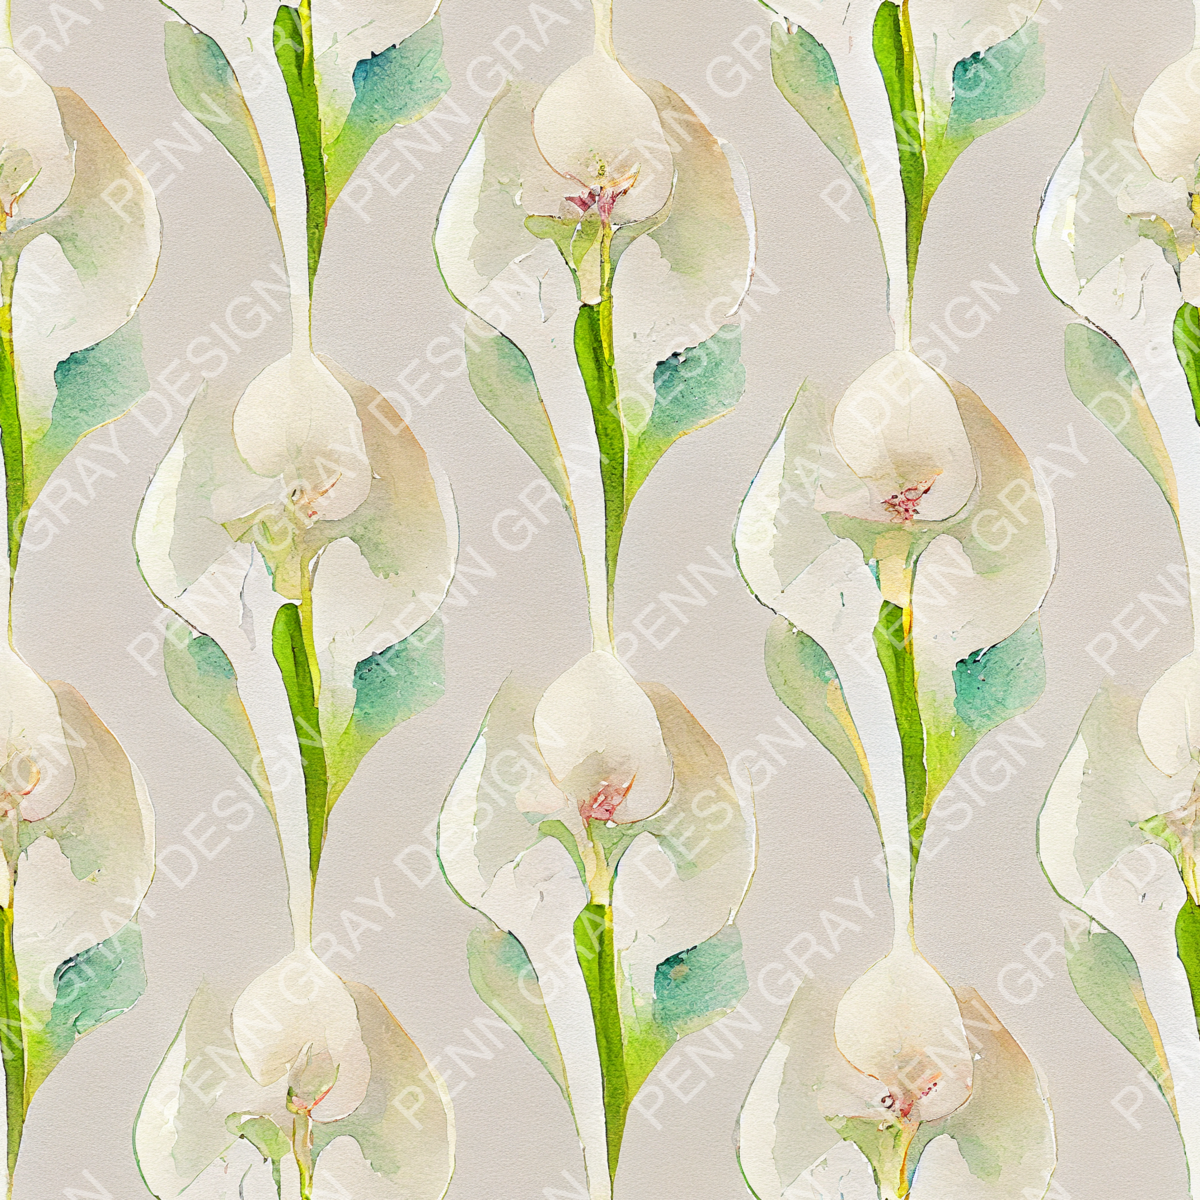 darwin-orchid-02-(watermarked)